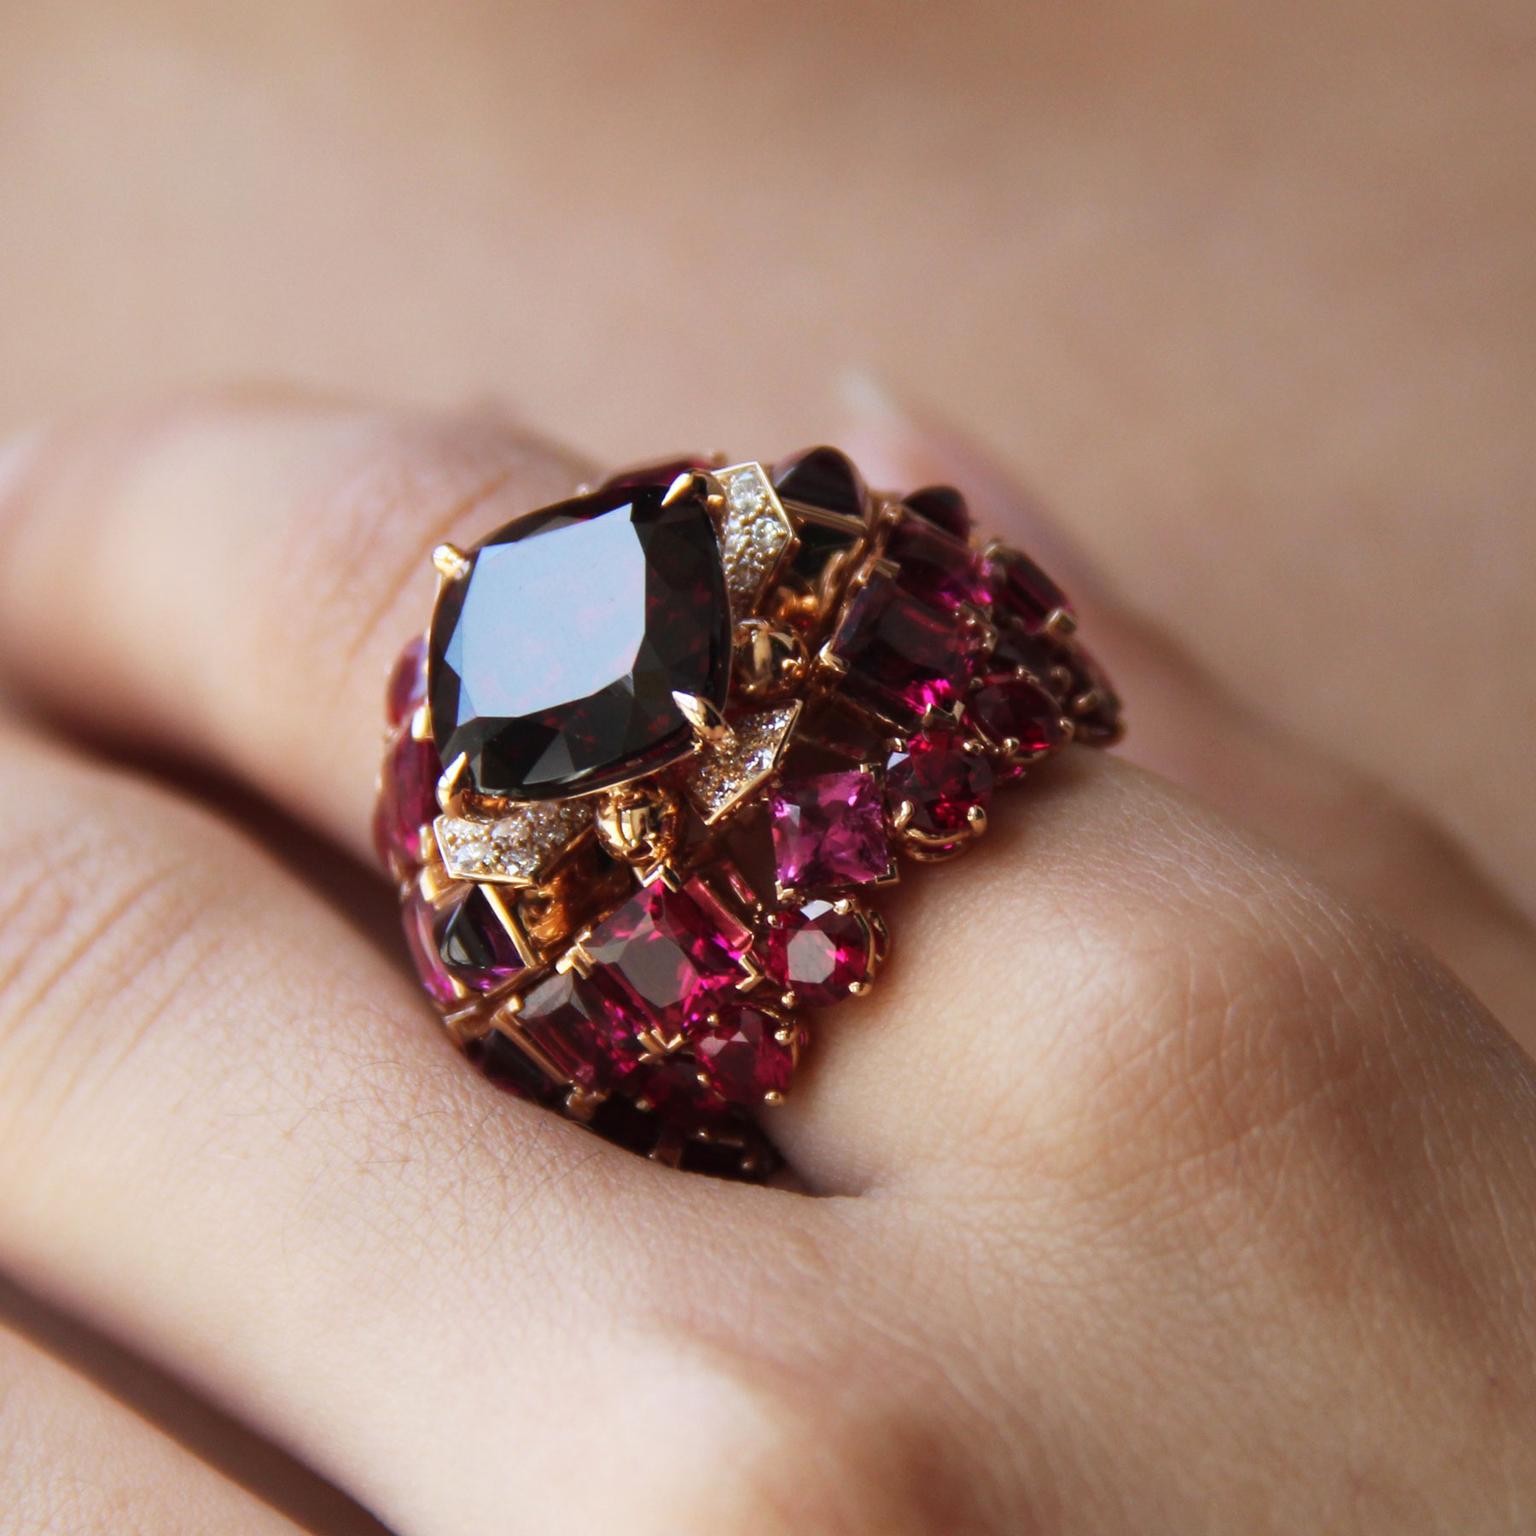 Chaumet est une fete Aria Passionata rhodolite garnet high jewellery ring